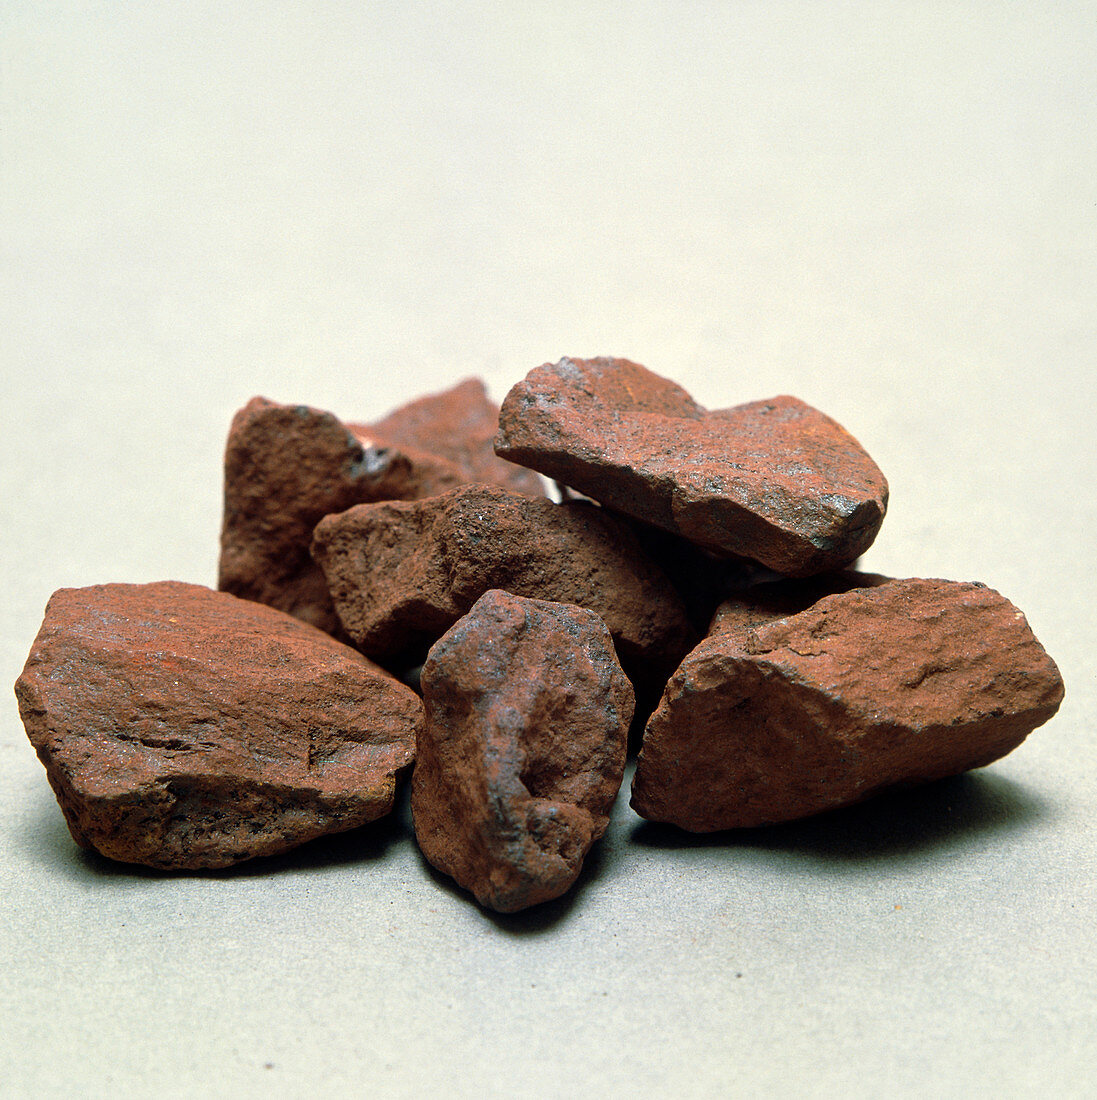 Lumps of hematite iron ore